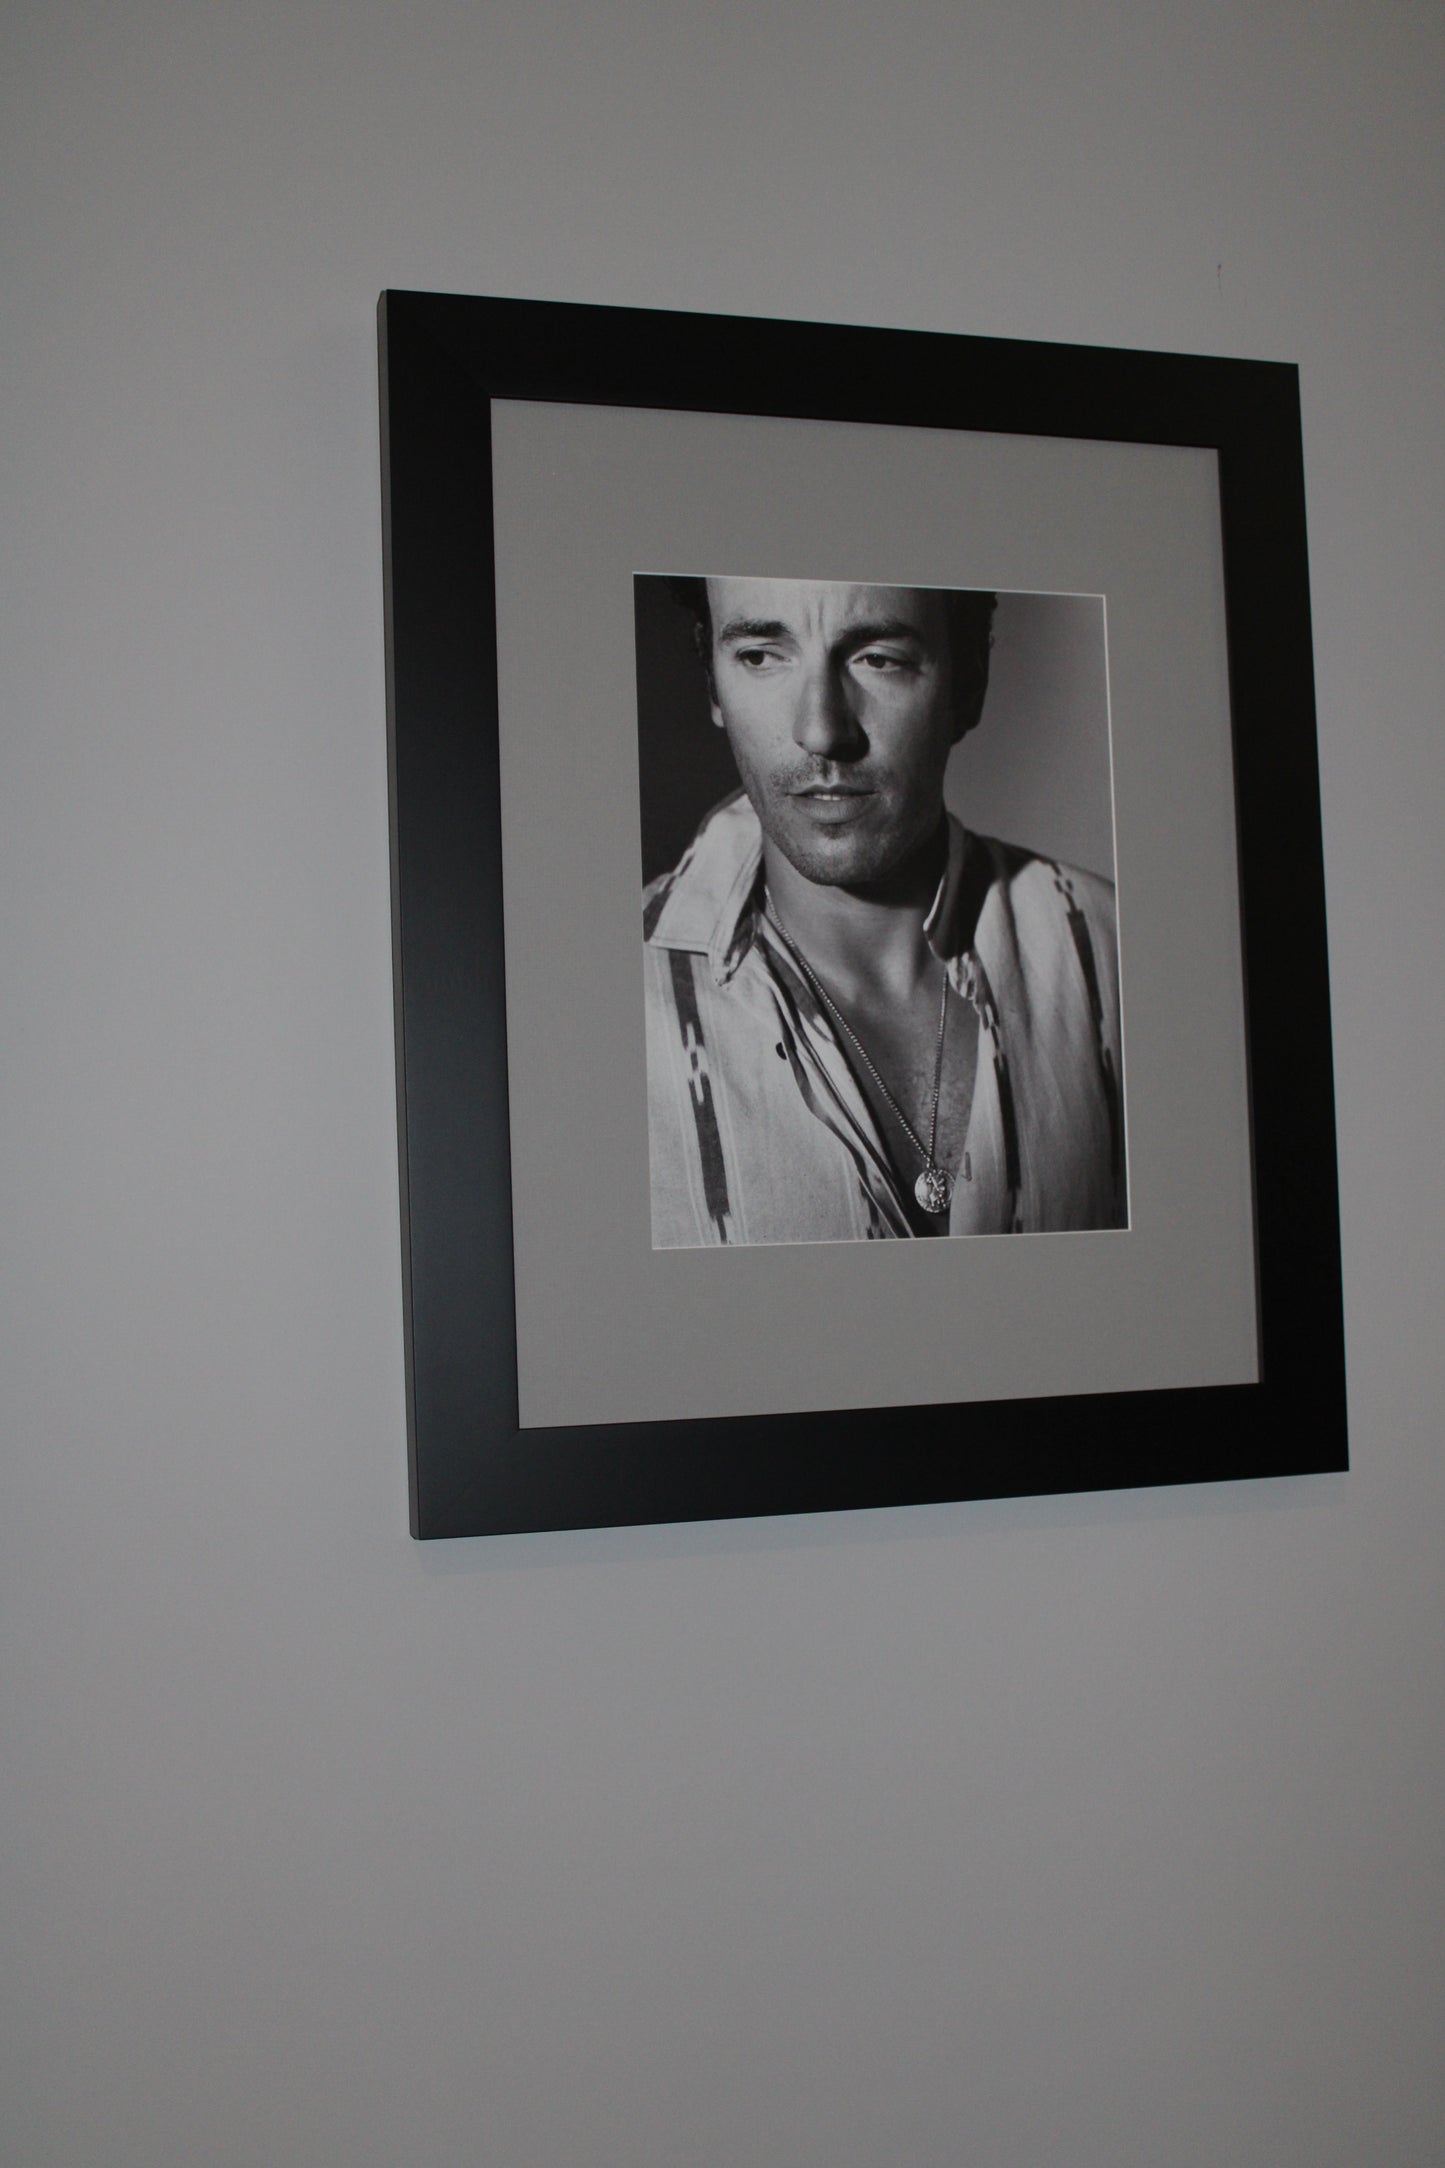 Bruce Springsteen - Beautiful Photo Captured by Photographer Bruce Weber - Custom Frame